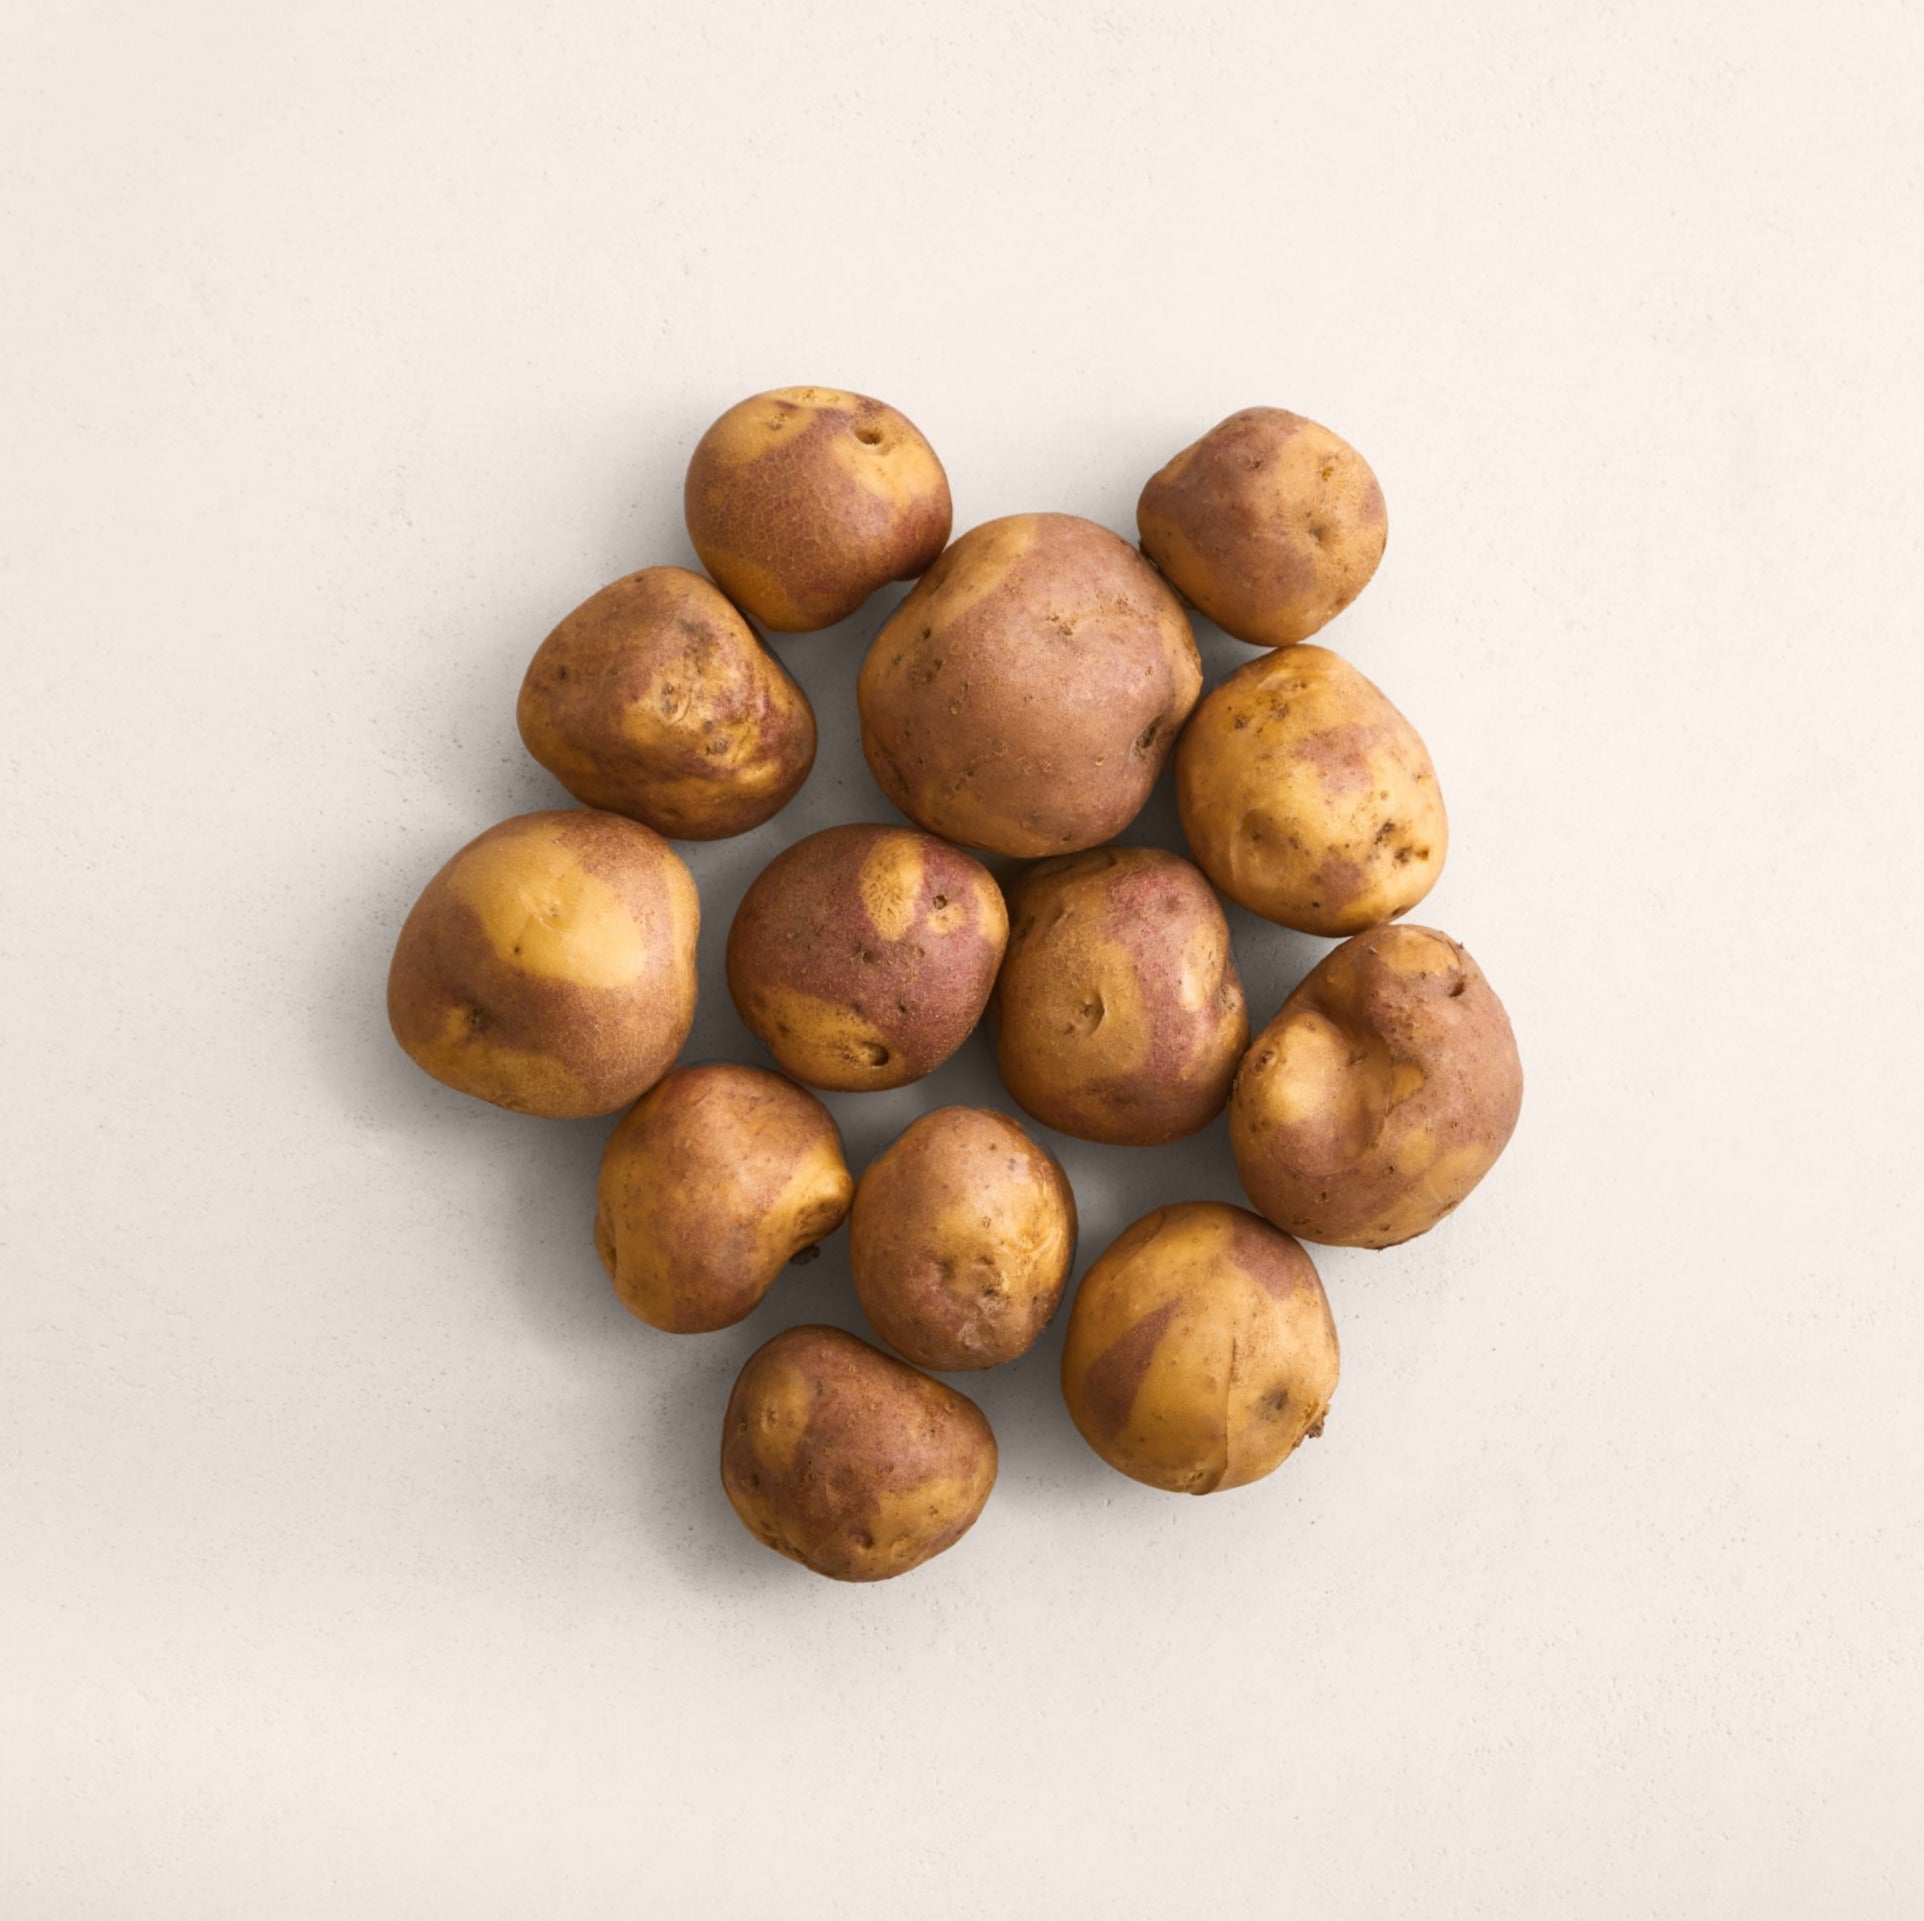 Dakota Dawn Seed Potatoes